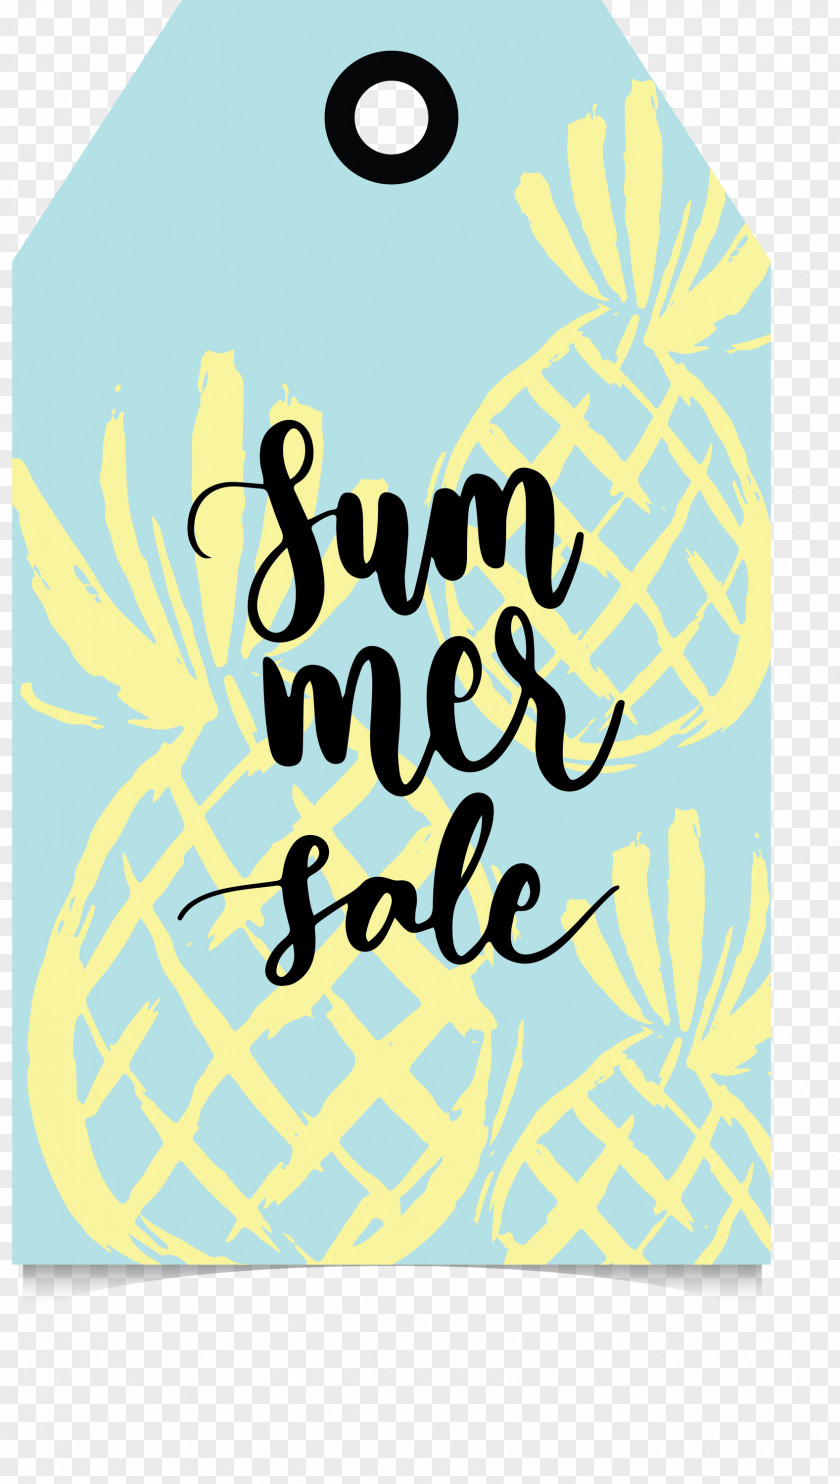 Summer Sale Sales Tag Label PNG